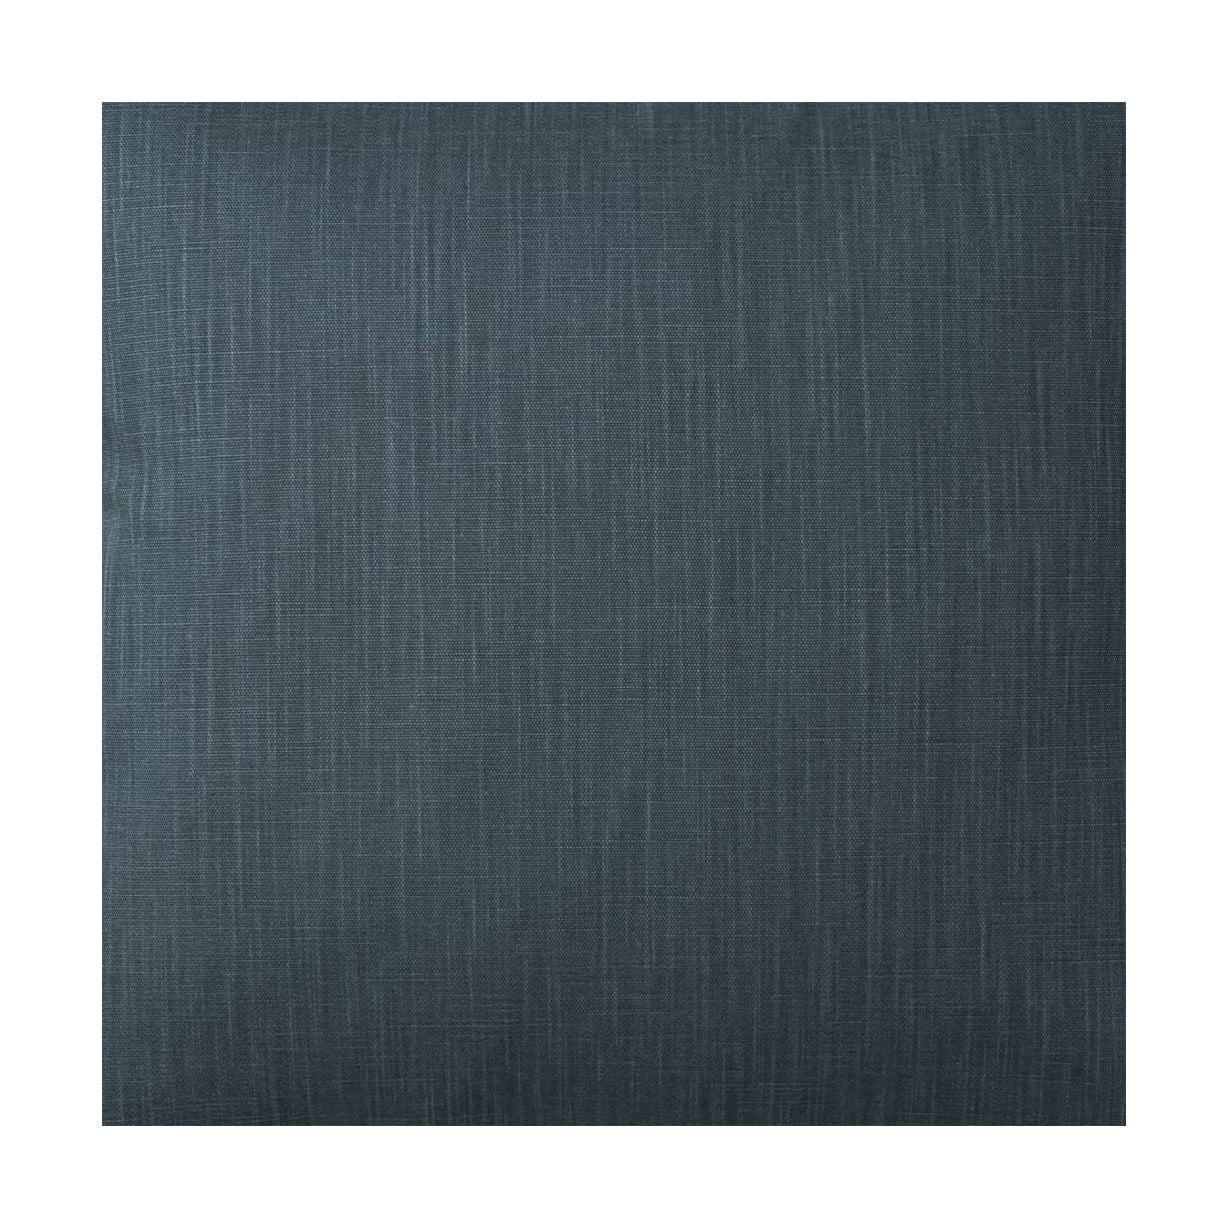 Spira Klotz Fabric Width 150 Cm (Price Per Meter), Dusty Blue